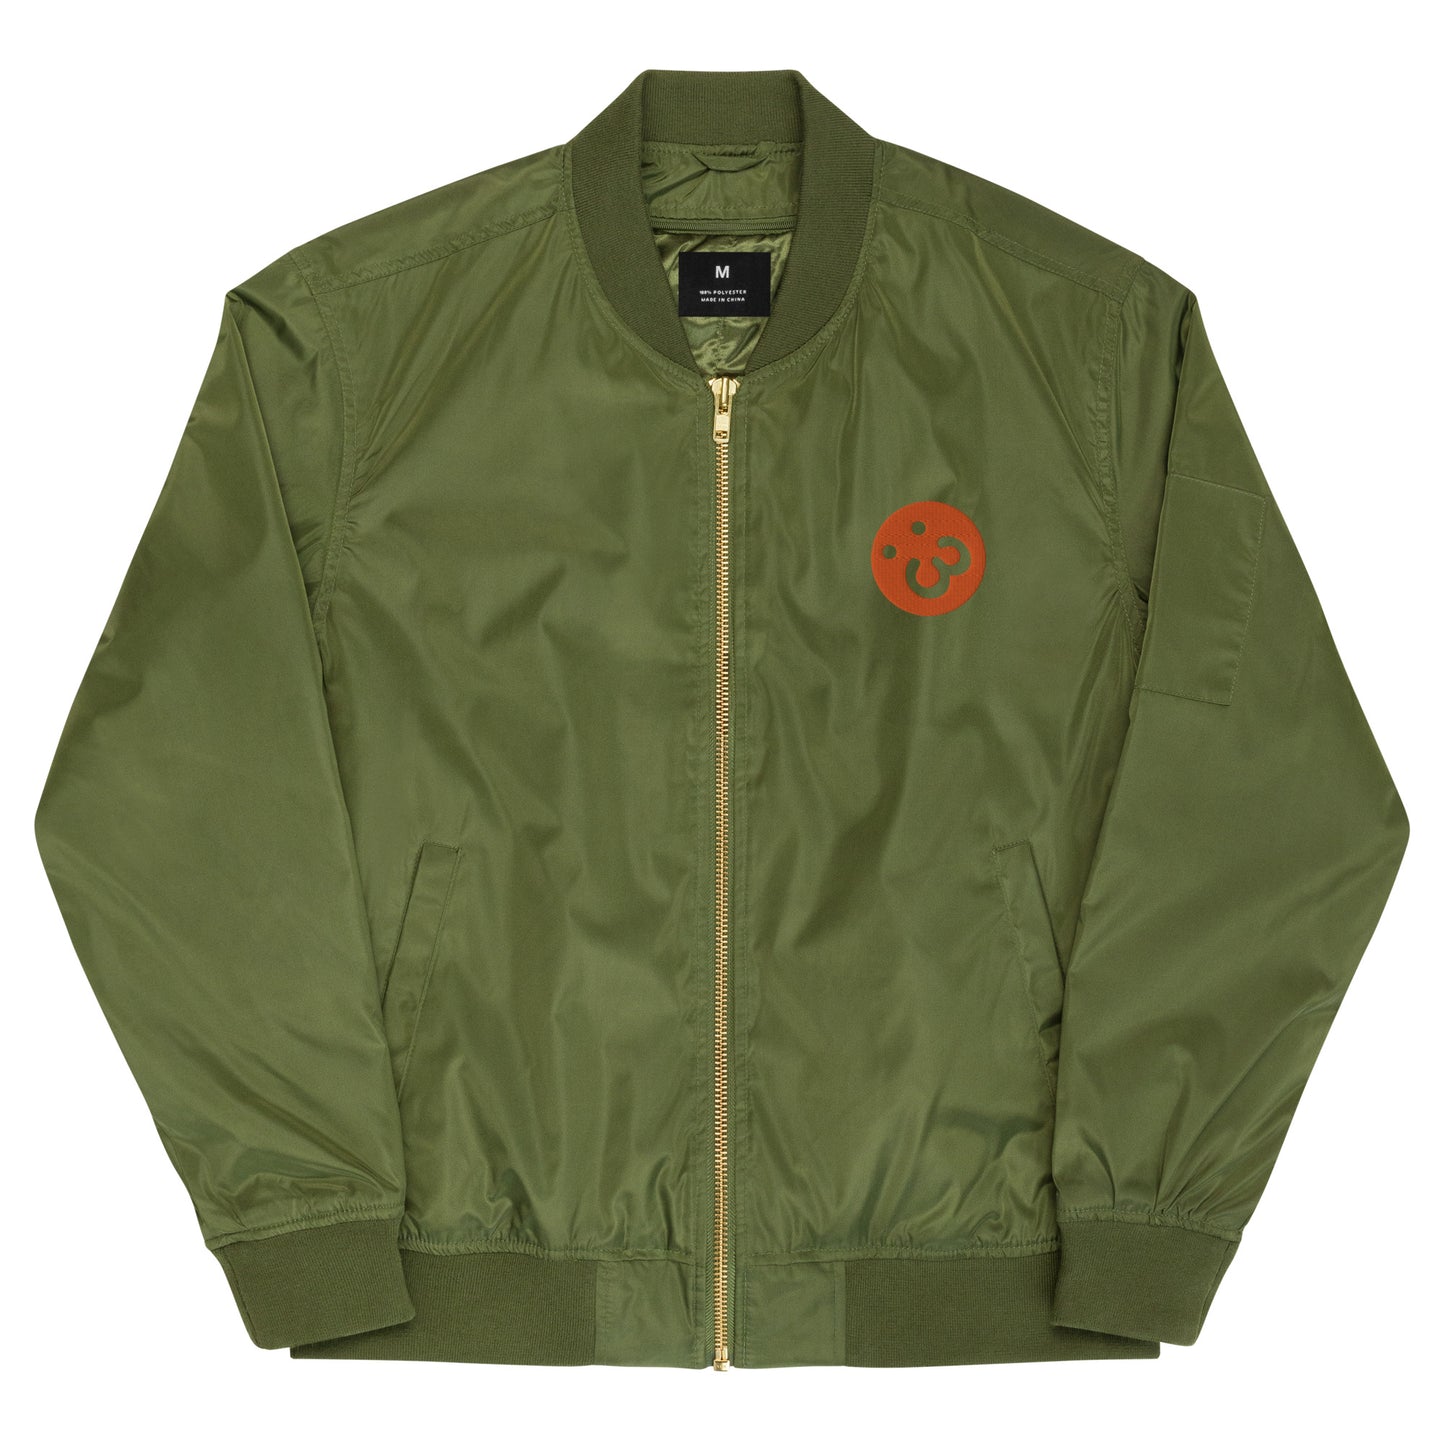 Swag Junkies Premium recycled bomber jacket